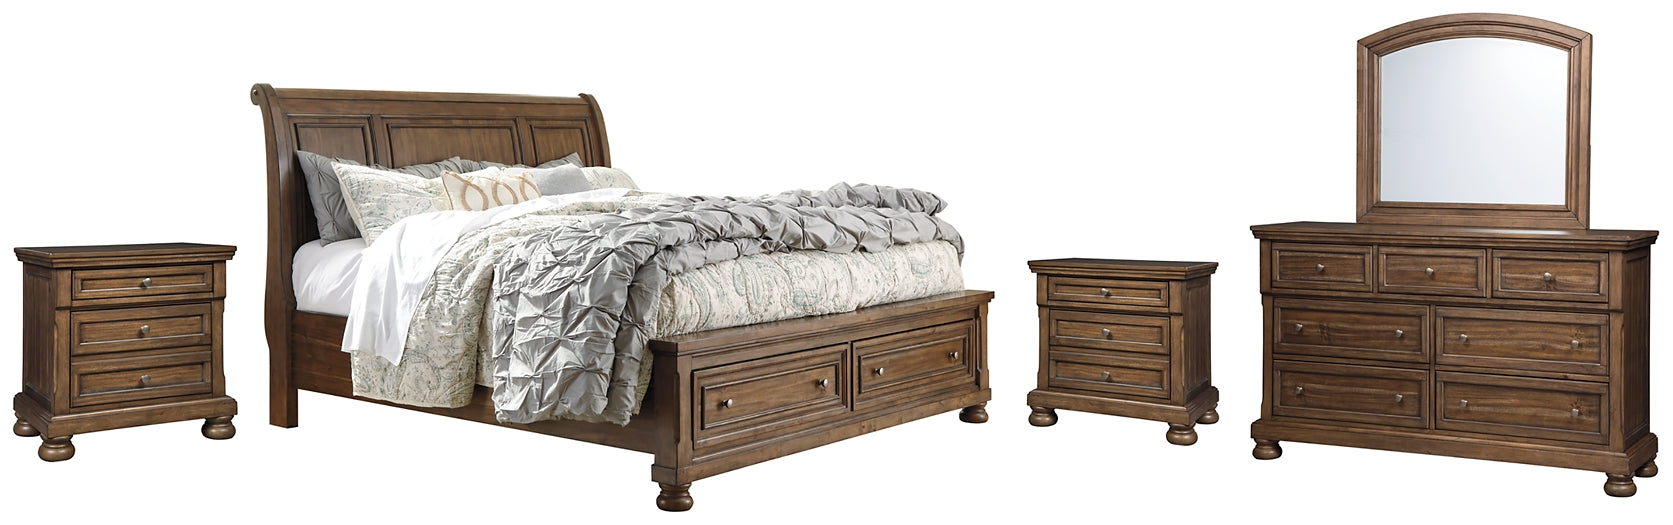 Flynnter Queen Sleigh Bed with 2 Storage Drawers with Mirrored Dresser and 2 Nightstands Wilson Furniture (OH)  in Bridgeport, Ohio. Serving Bridgeport, Yorkville, Bellaire, & Avondale